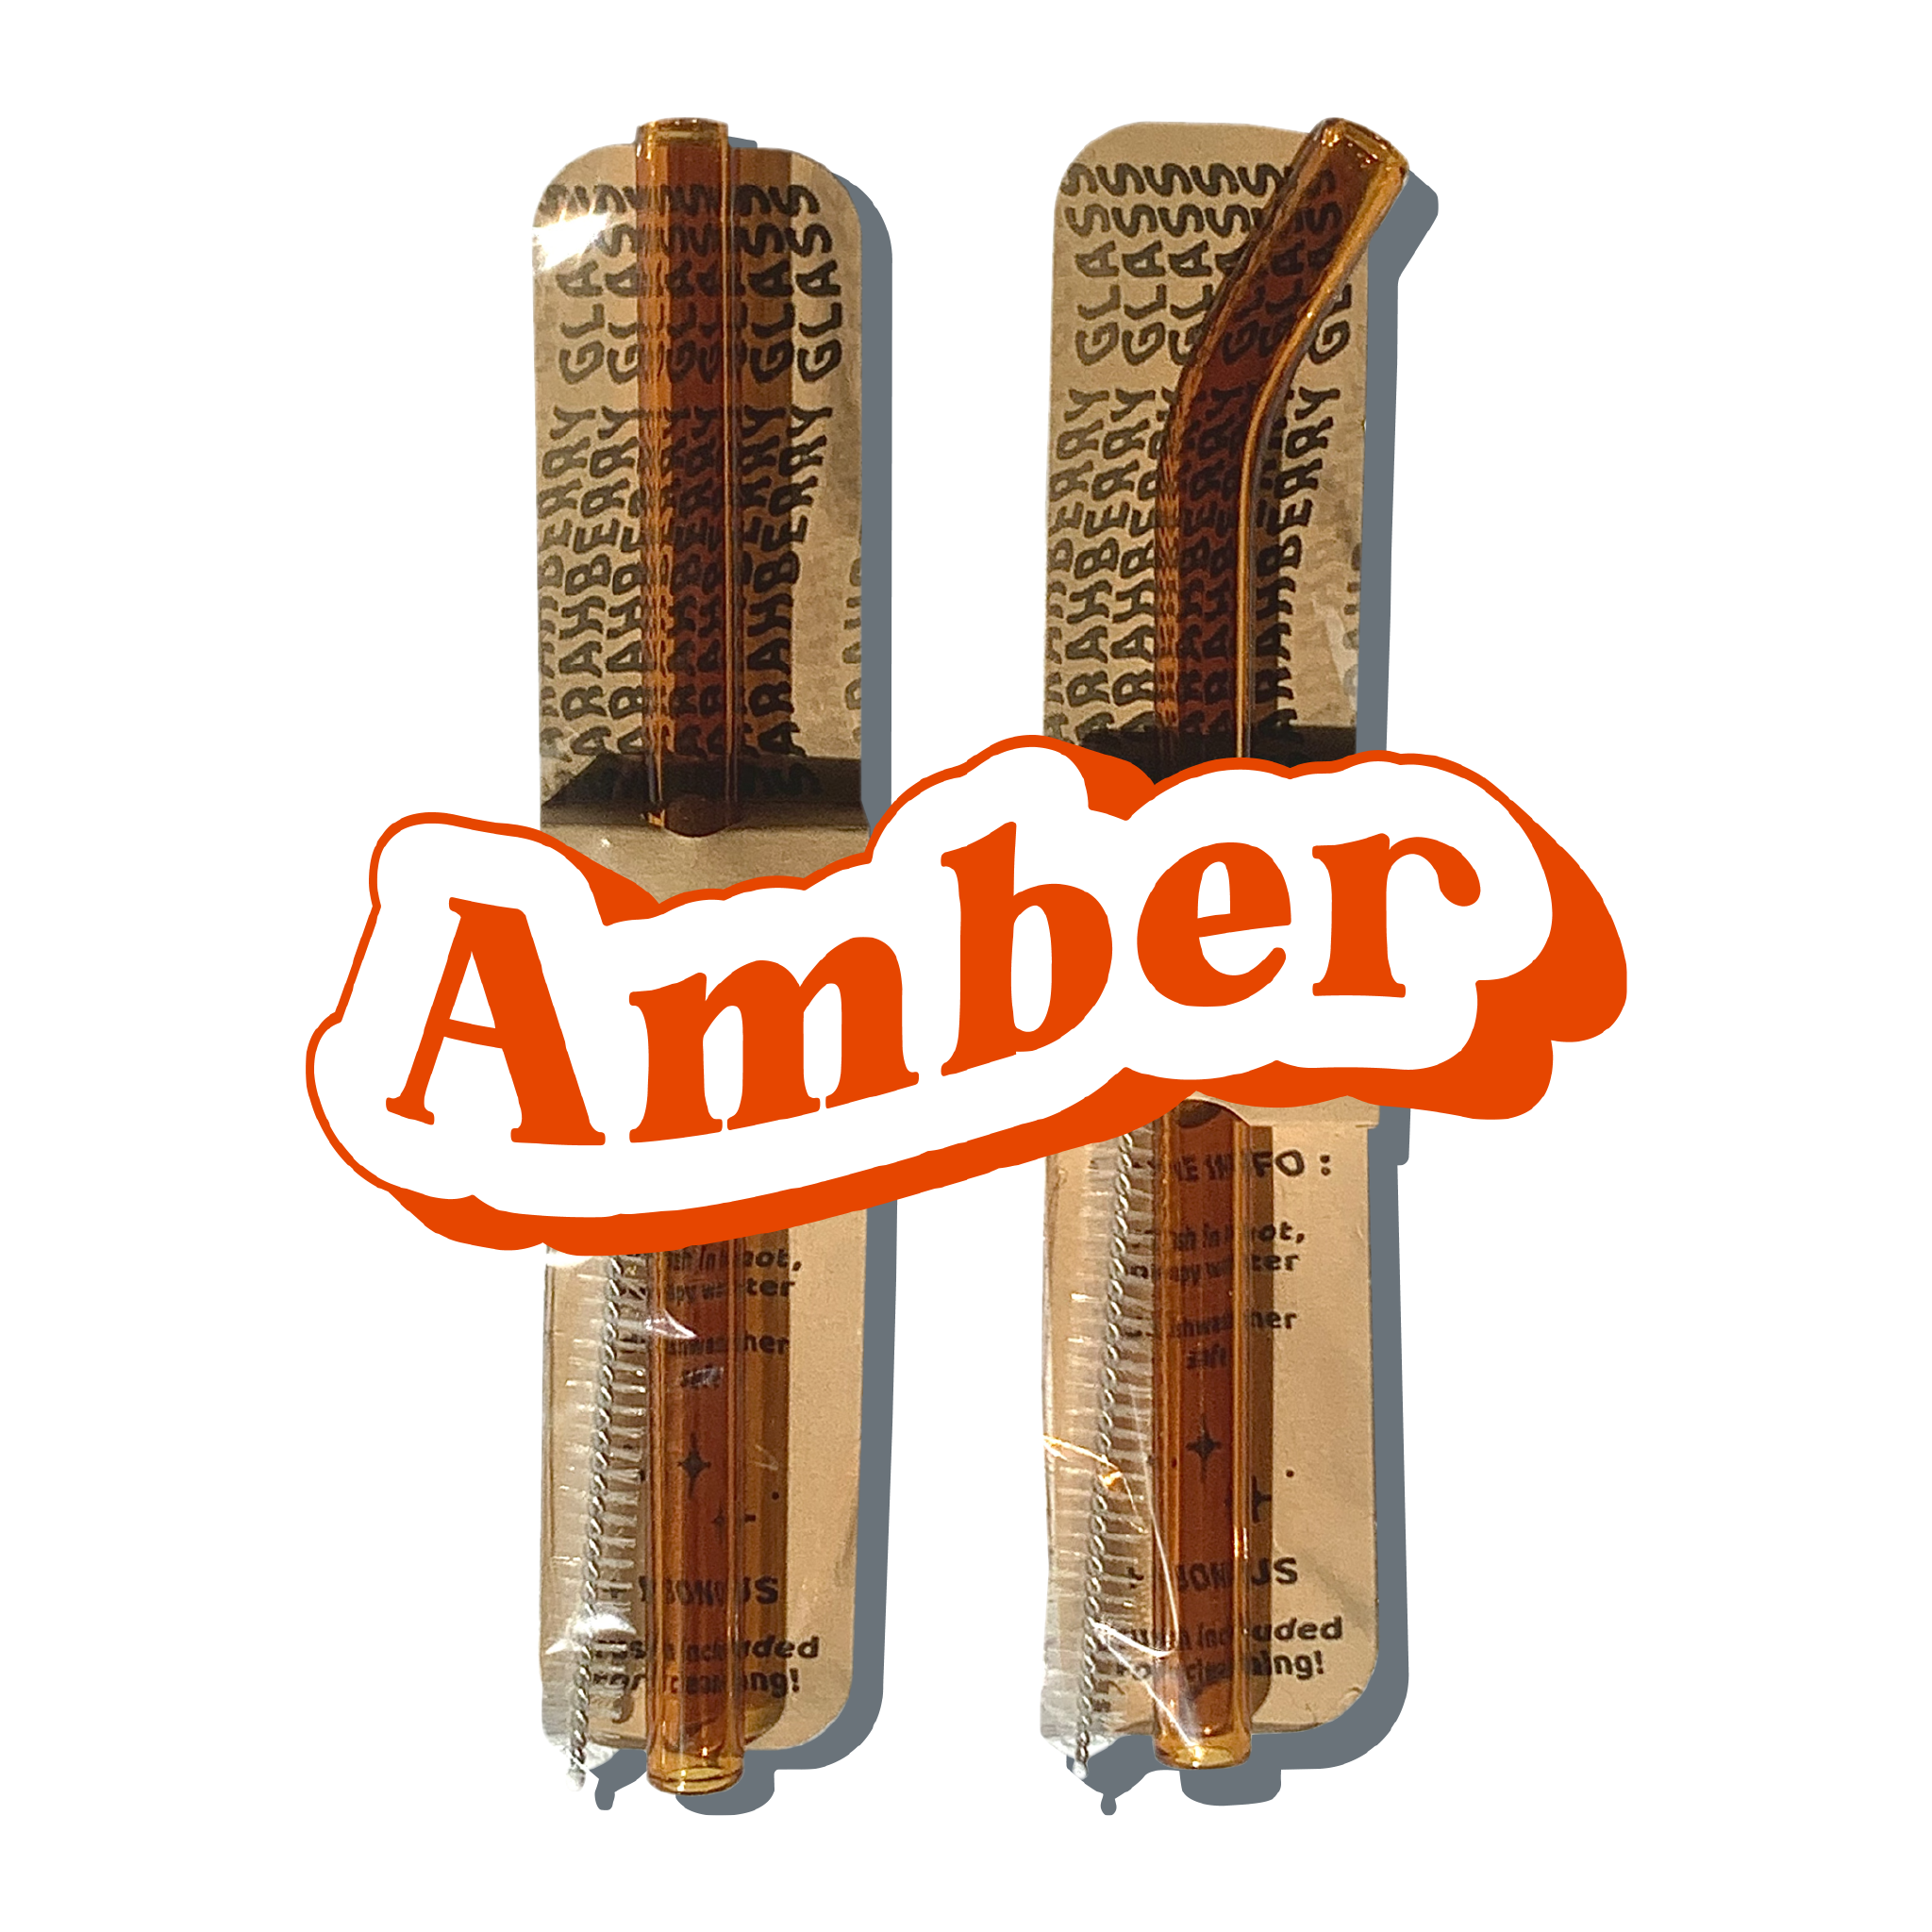 Straight Glass Straw Amber 14mm